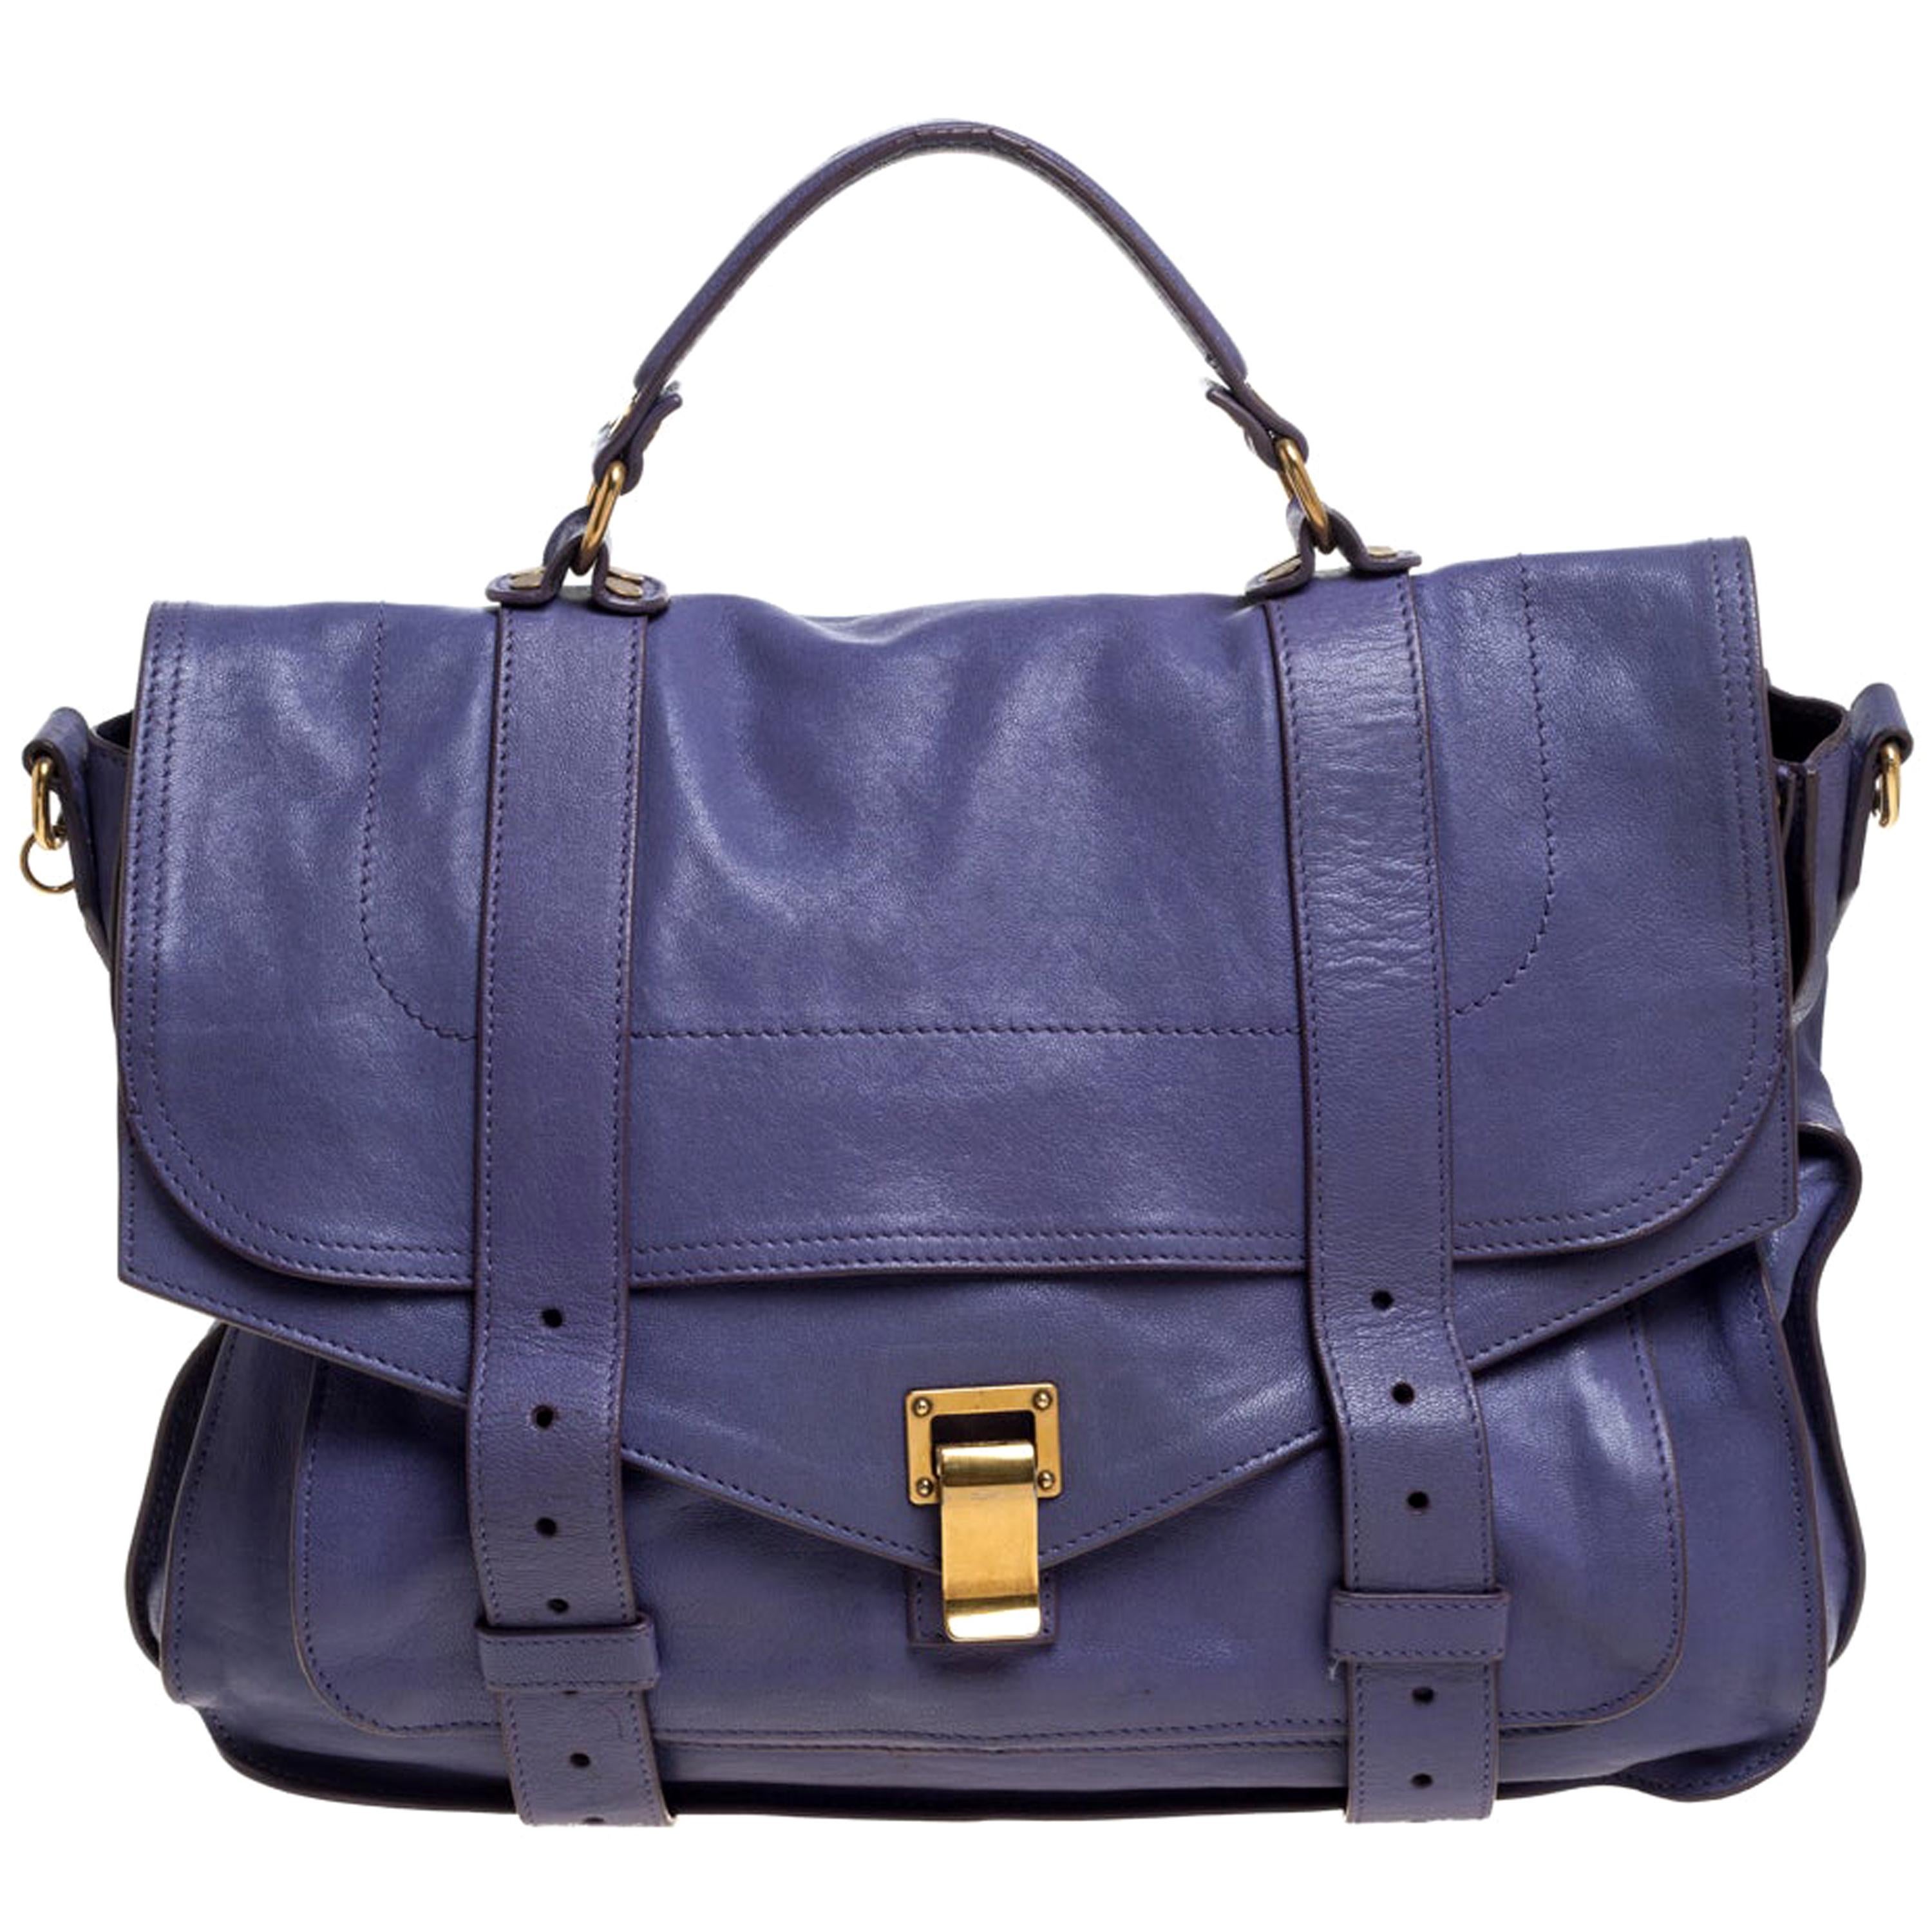 Proenza Schouler Purple Leather Large PS1 Top Handle Bag